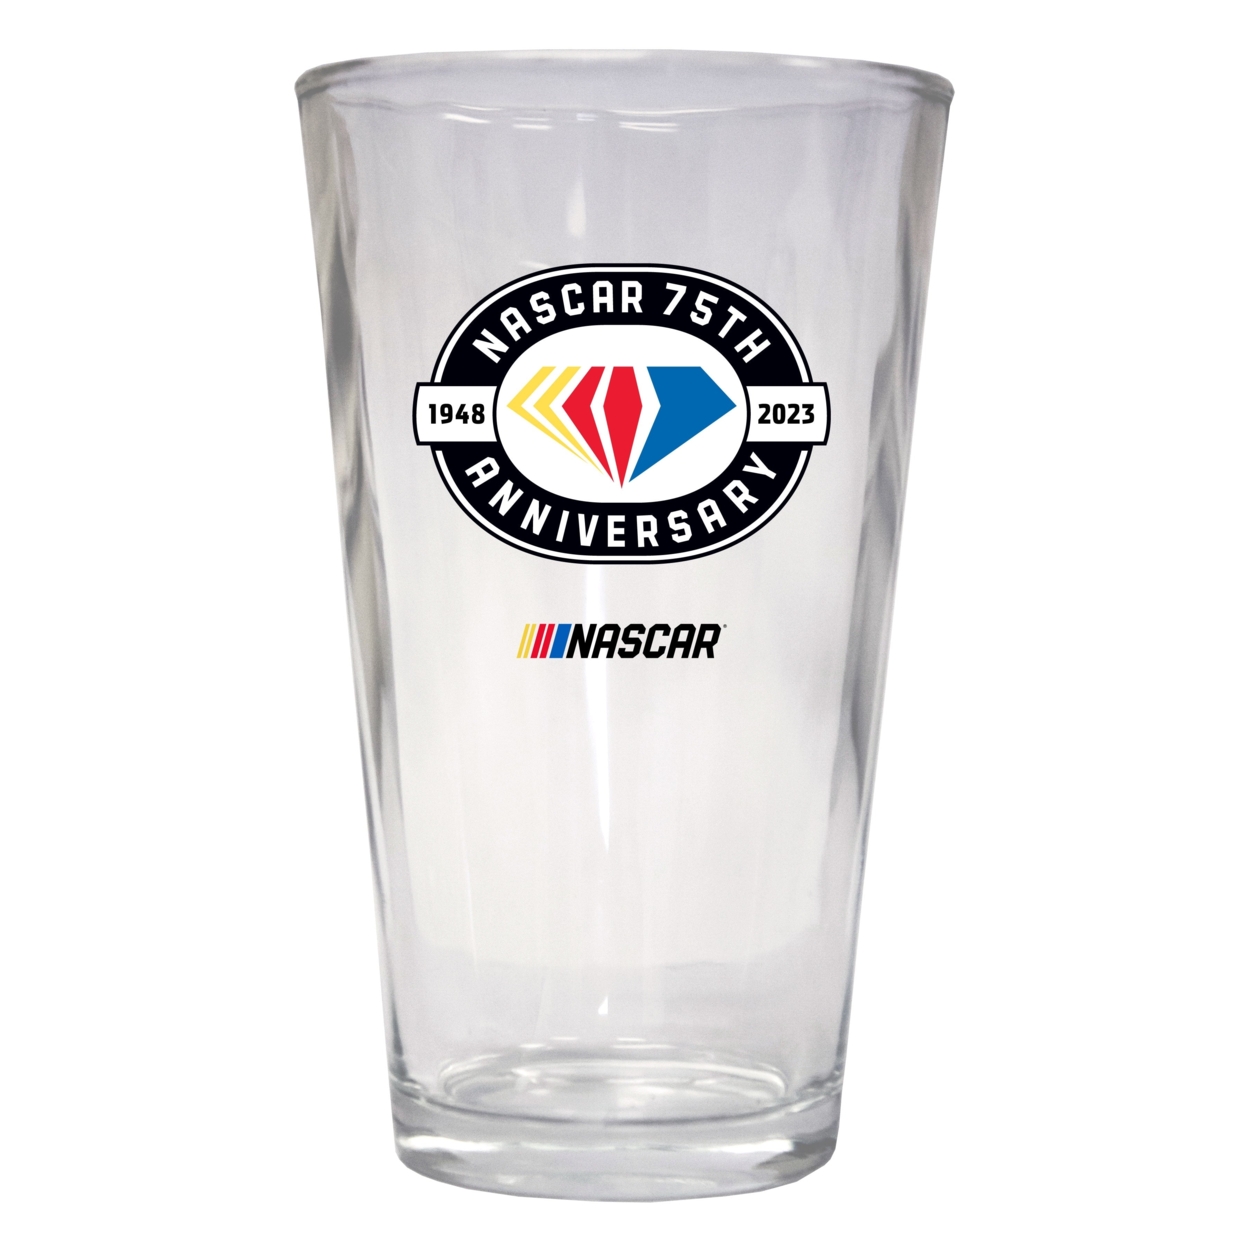 NASCAR 75 Year Anniversary Pint Glass